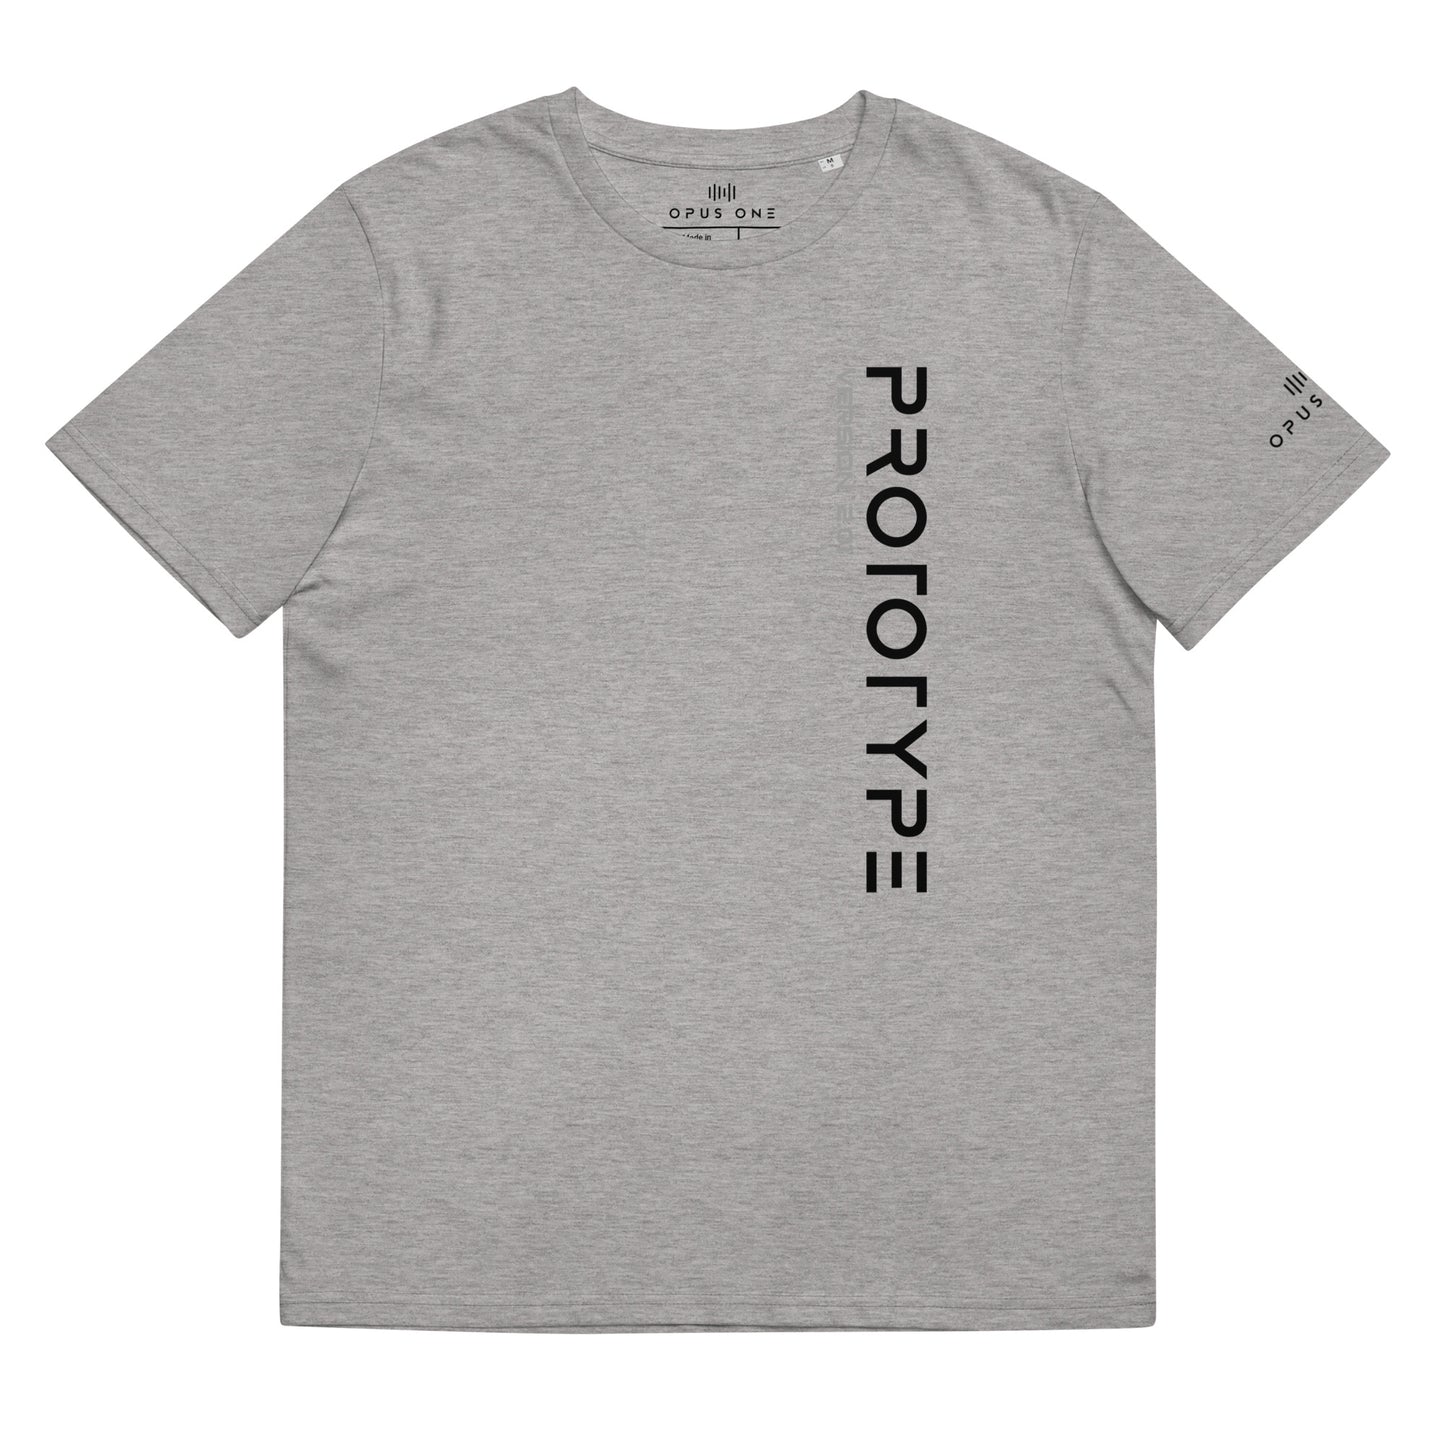 Prototype (v4) Unisex organic cotton t-shirt (Black Text)